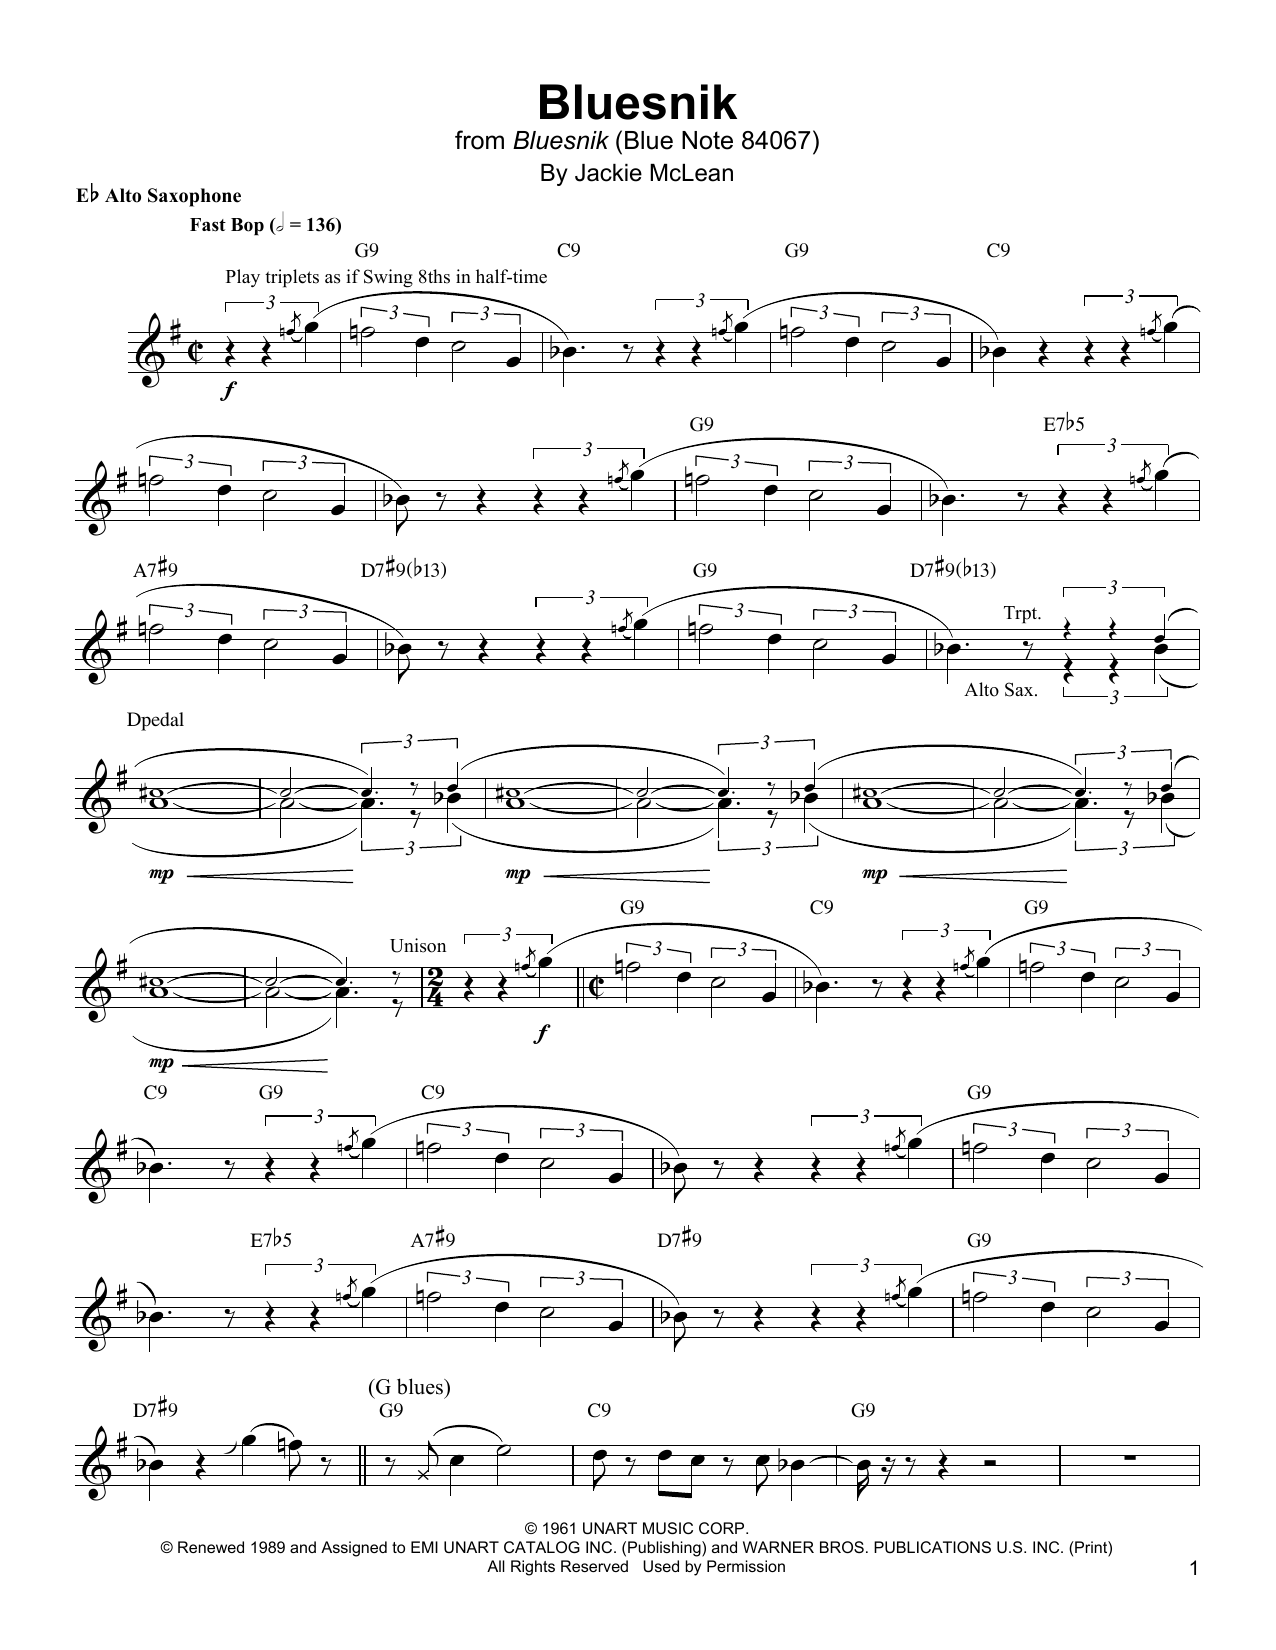 Jackie McLean Bluesnik Sheet Music Notes & Chords for Alto Sax Transcription - Download or Print PDF